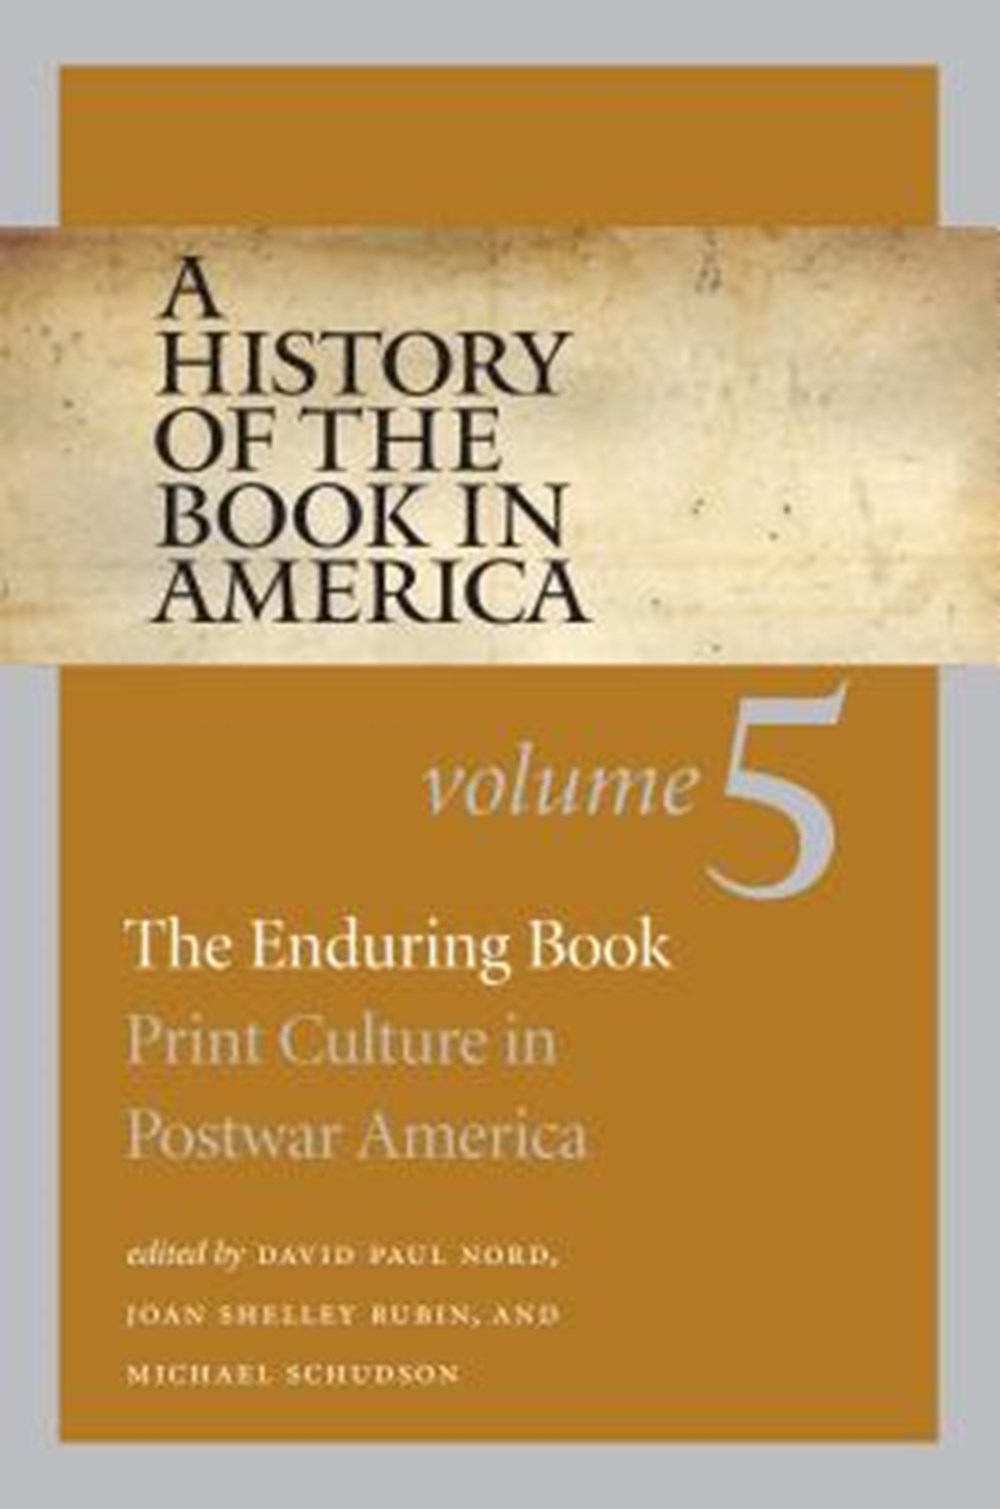 History of the Book in America Volume 5: The Enduring Book: Print Culture in Postwar America